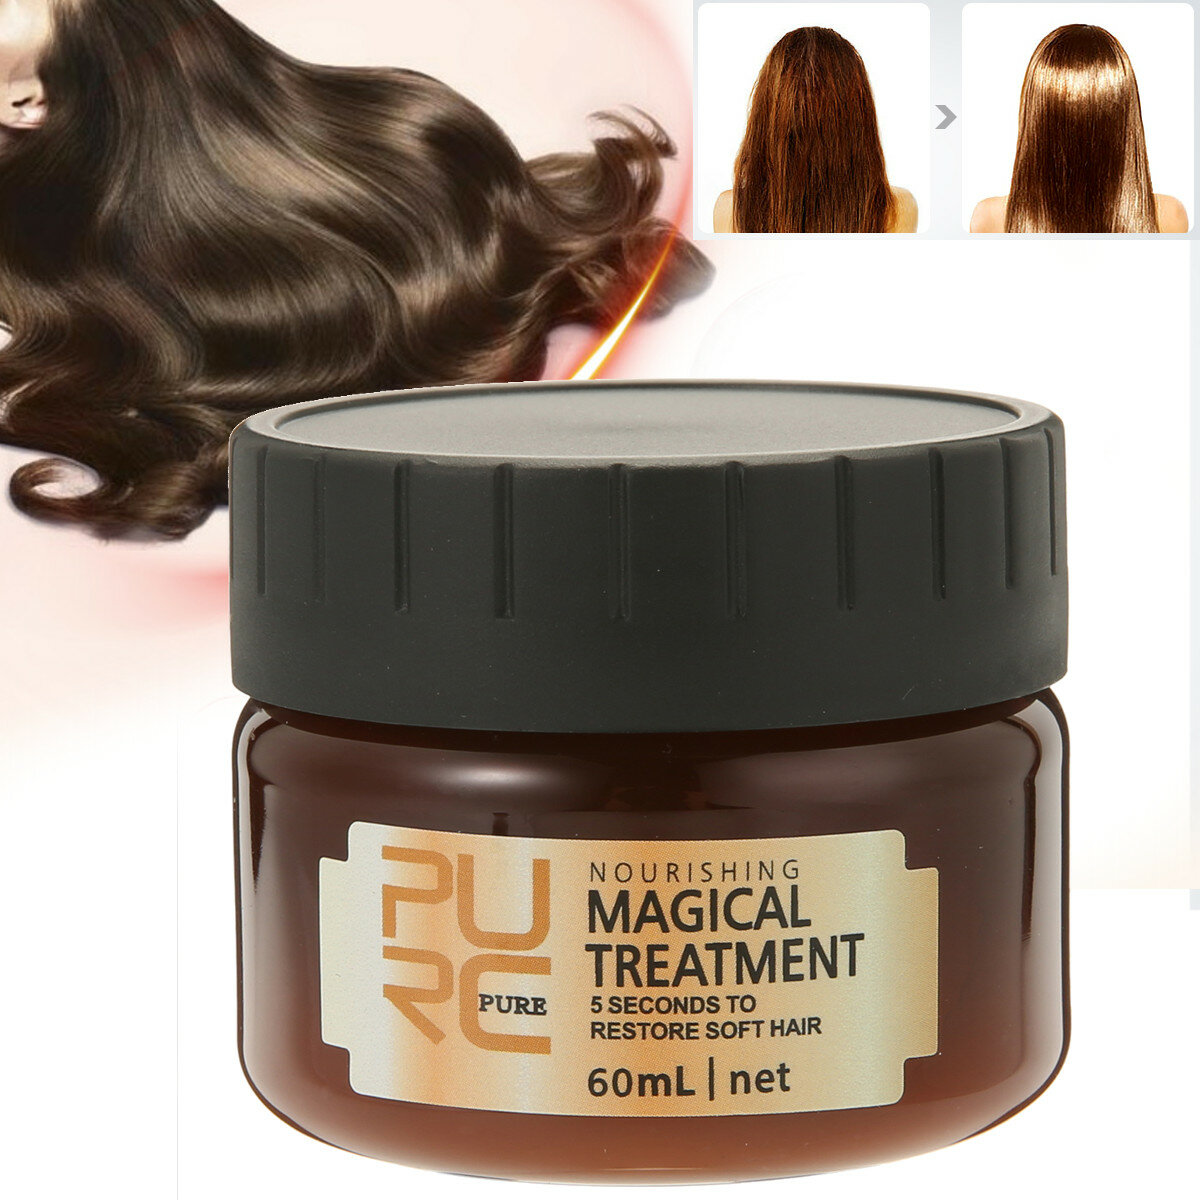 Маска для волос magic. Pure Magical treatment маска для волос. Маска для волос hair. Маска для волос американская. Маска для волос 5.